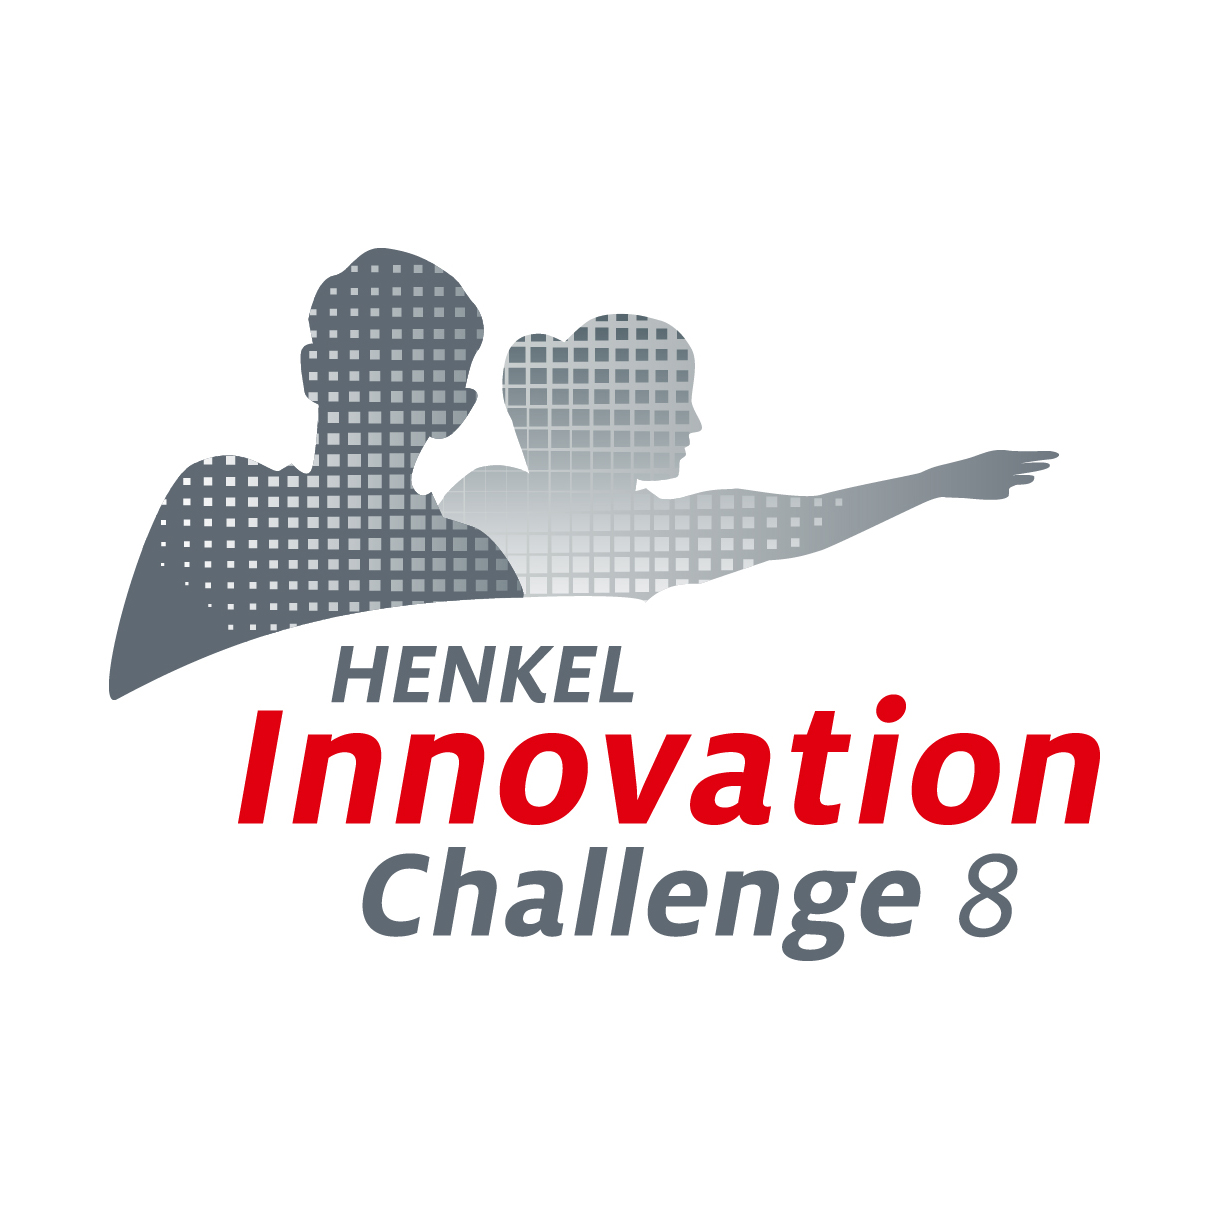 Rusza kolejna edycja konkursu Henkel Innovation Challenge